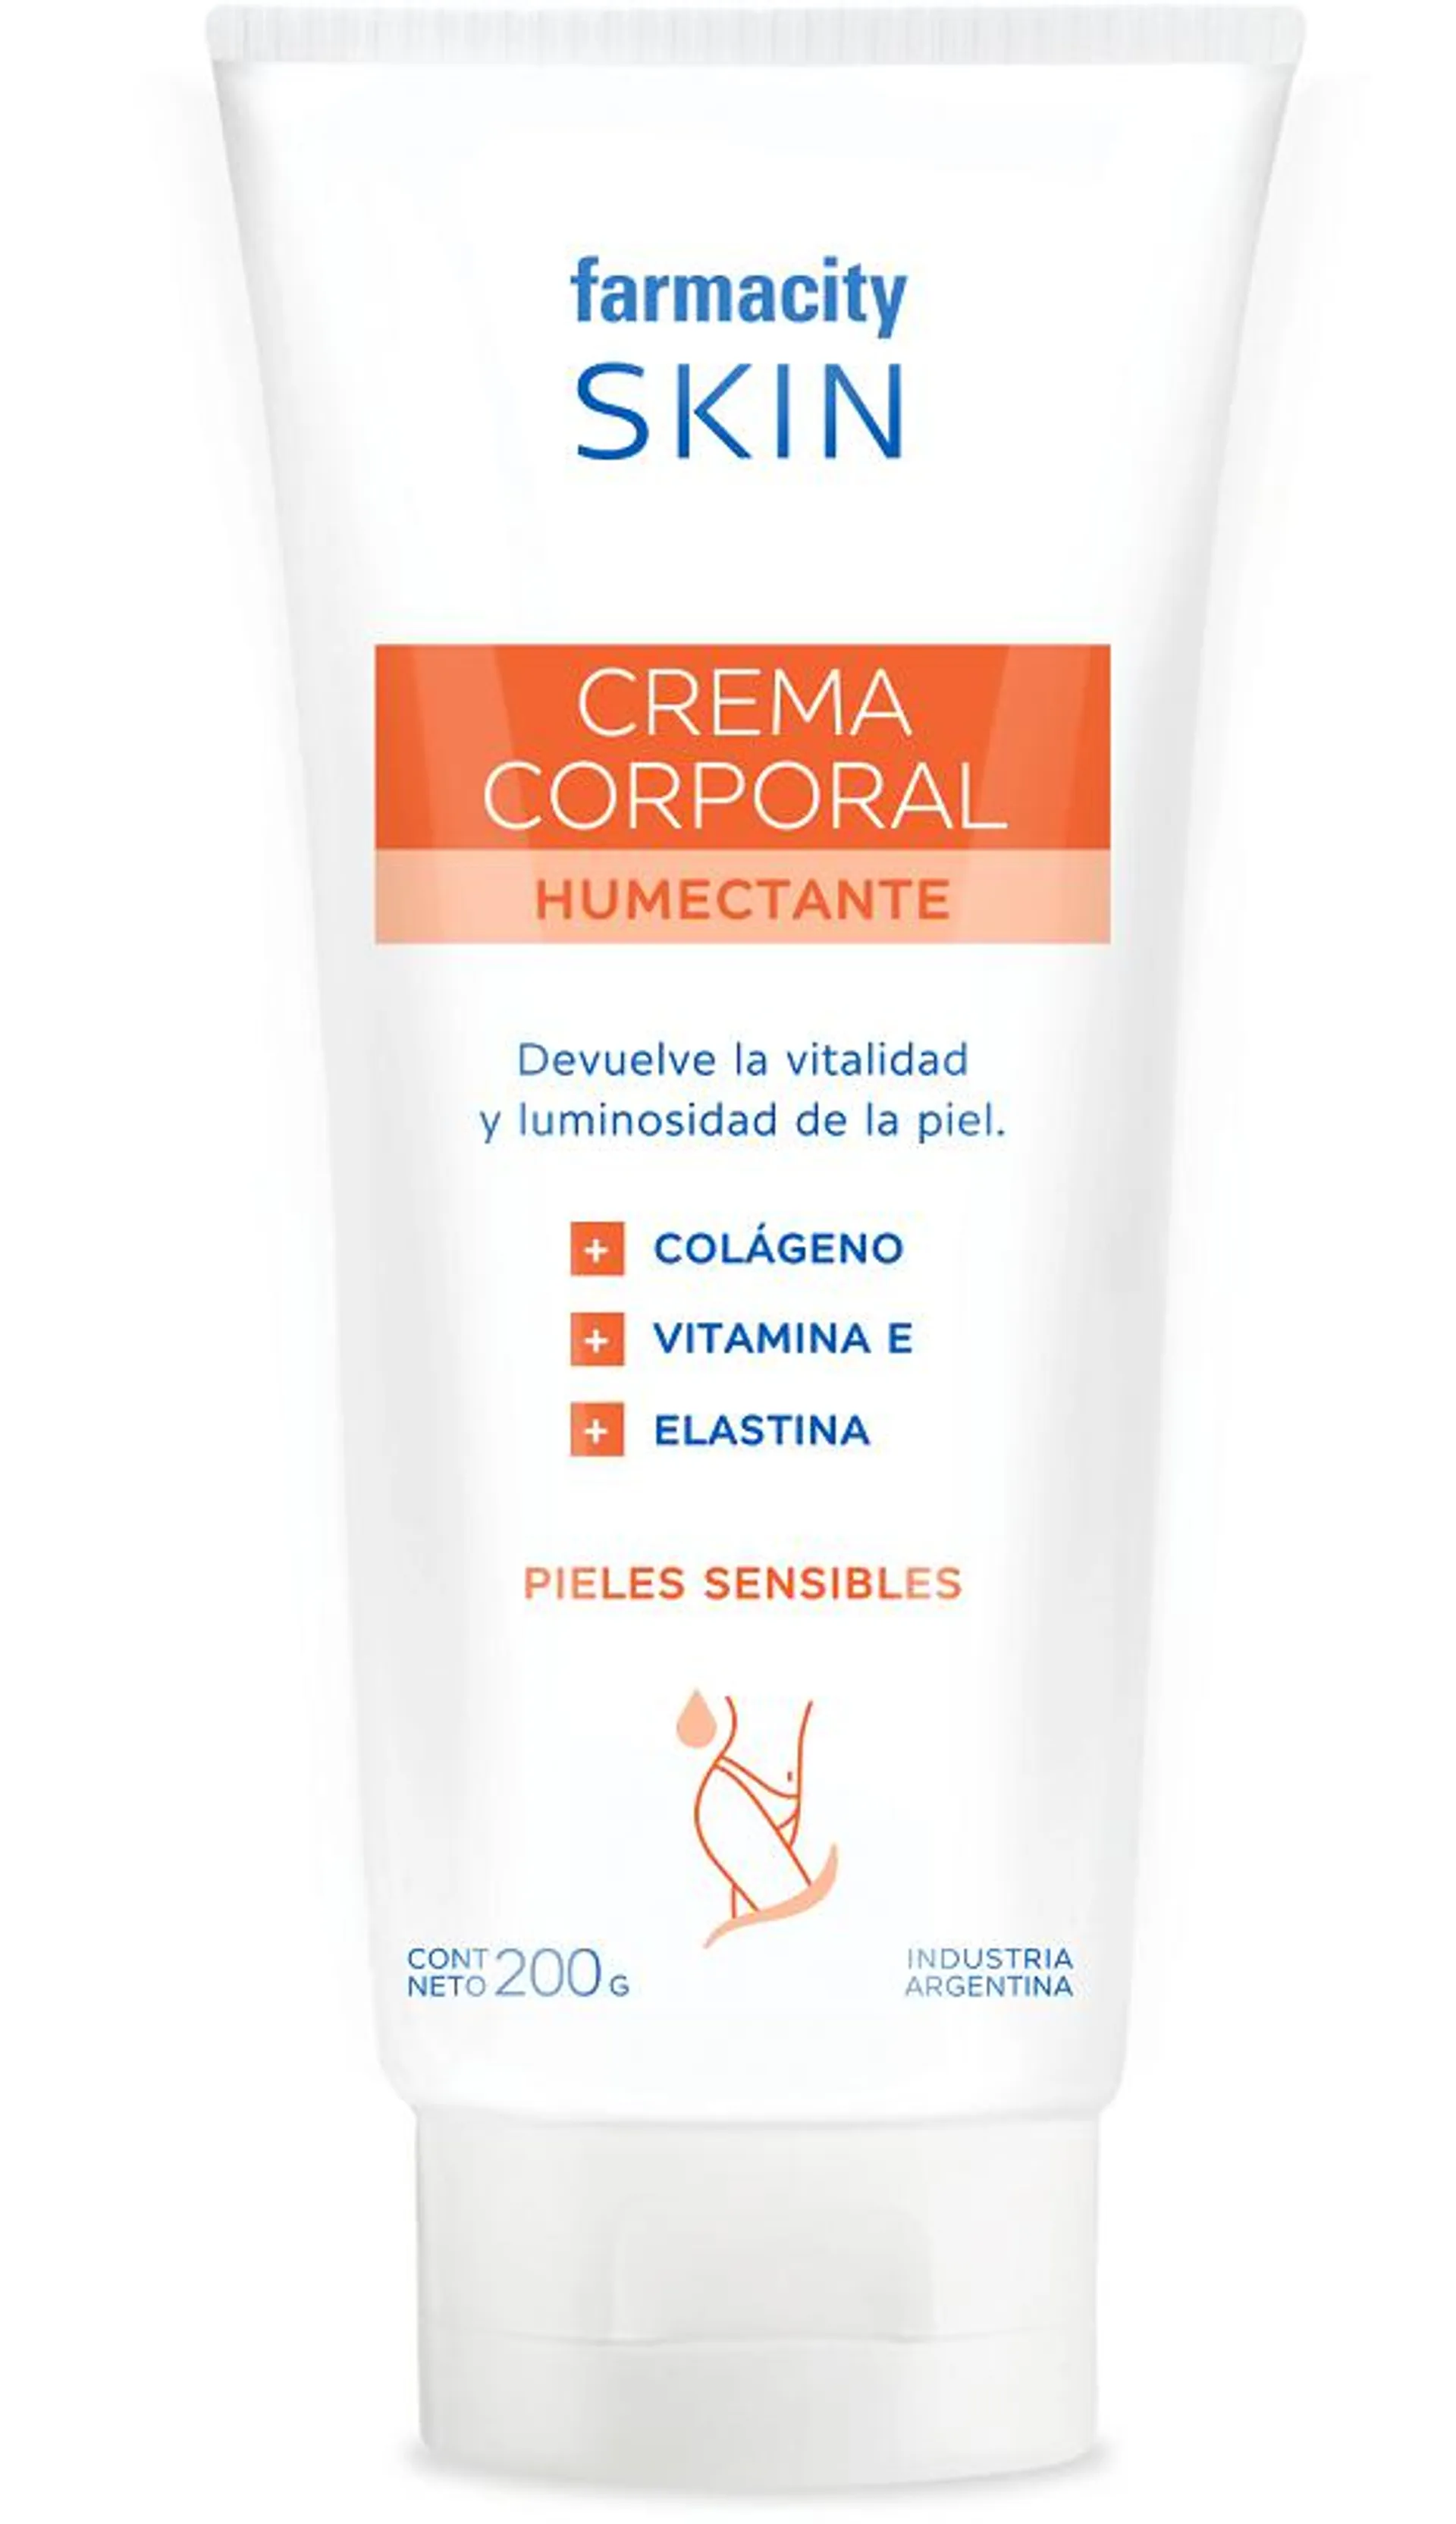 Crema Corporal Farmacity Skin Humectante x 200 Gr